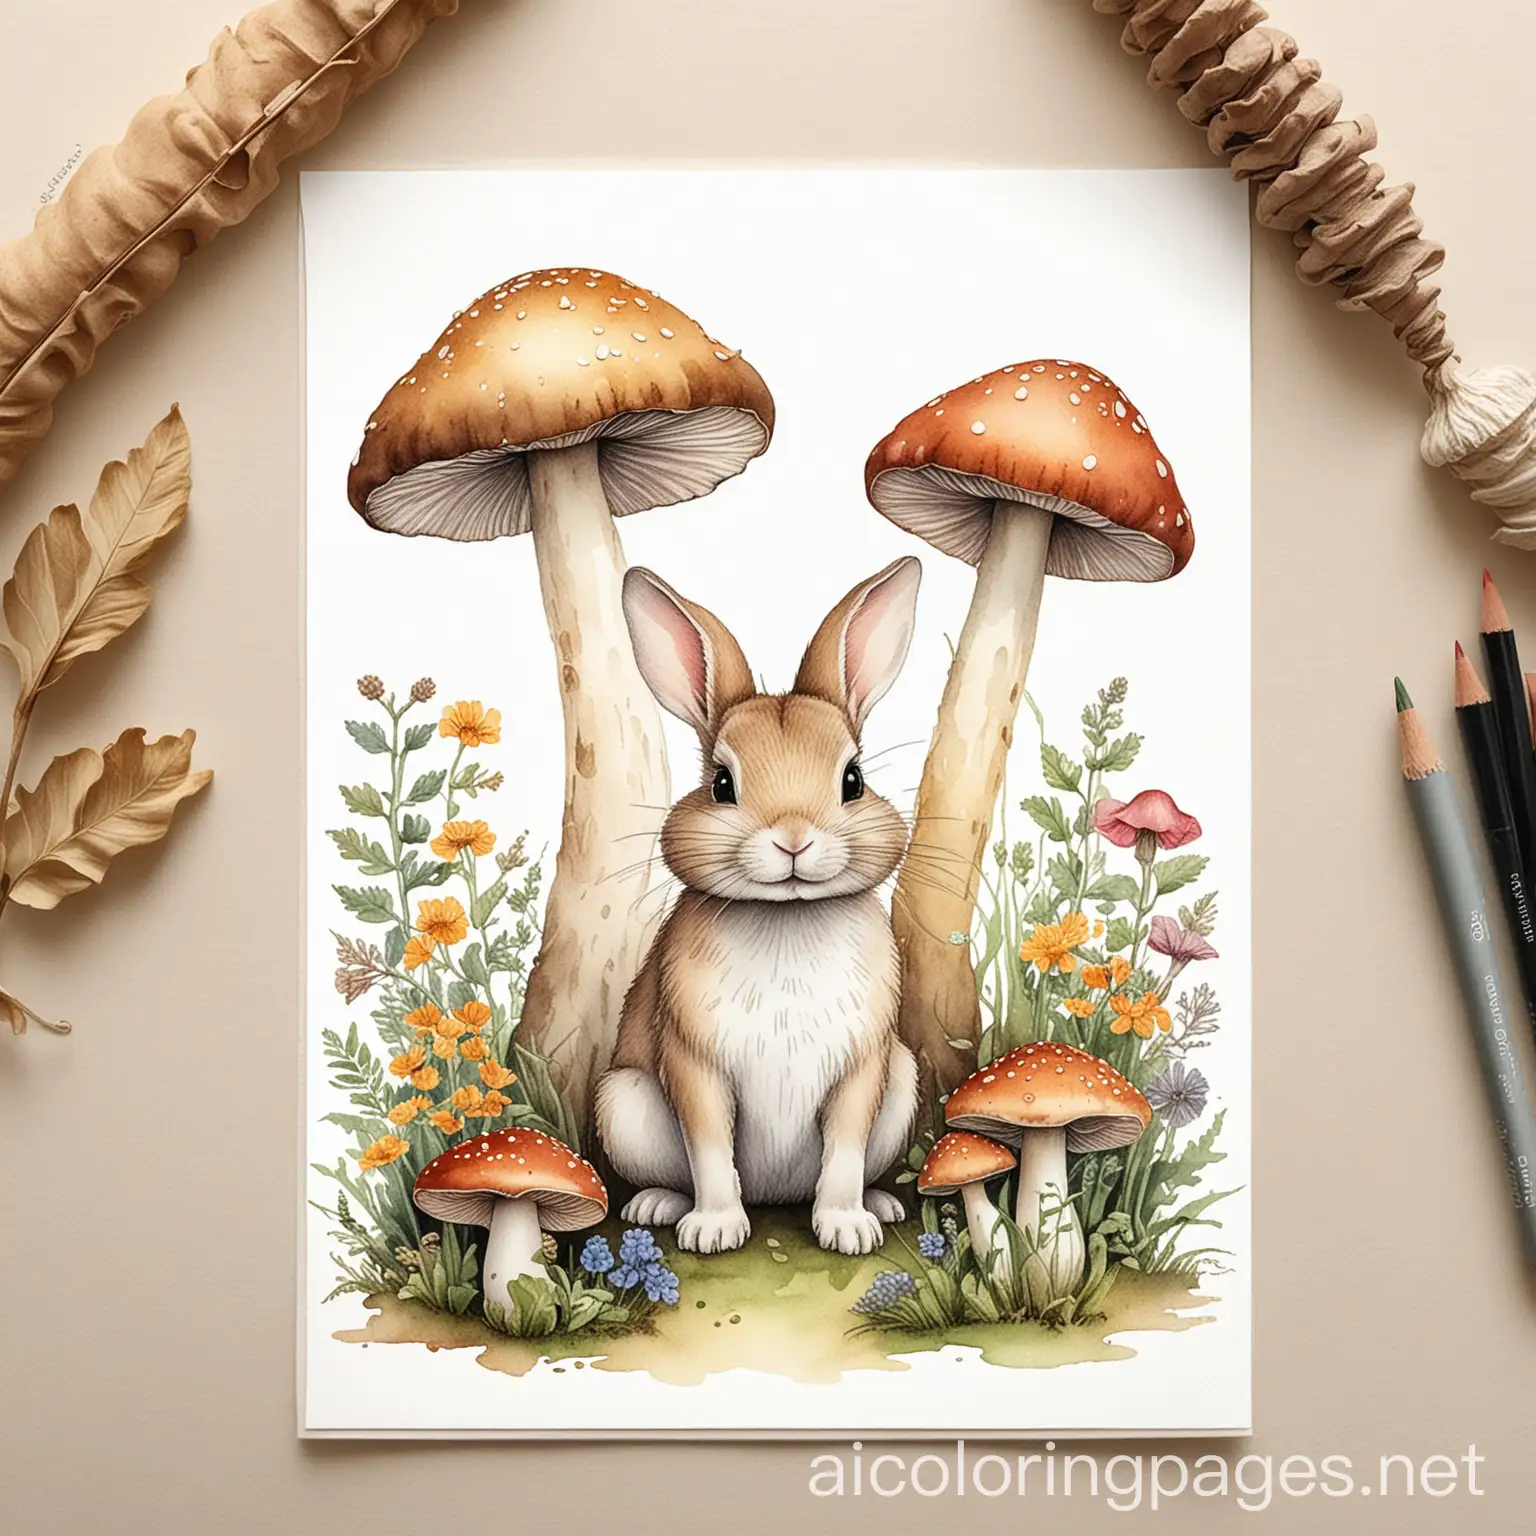 Vintage-Mushroom-and-Bunny-Watercolor-Coloring-Page